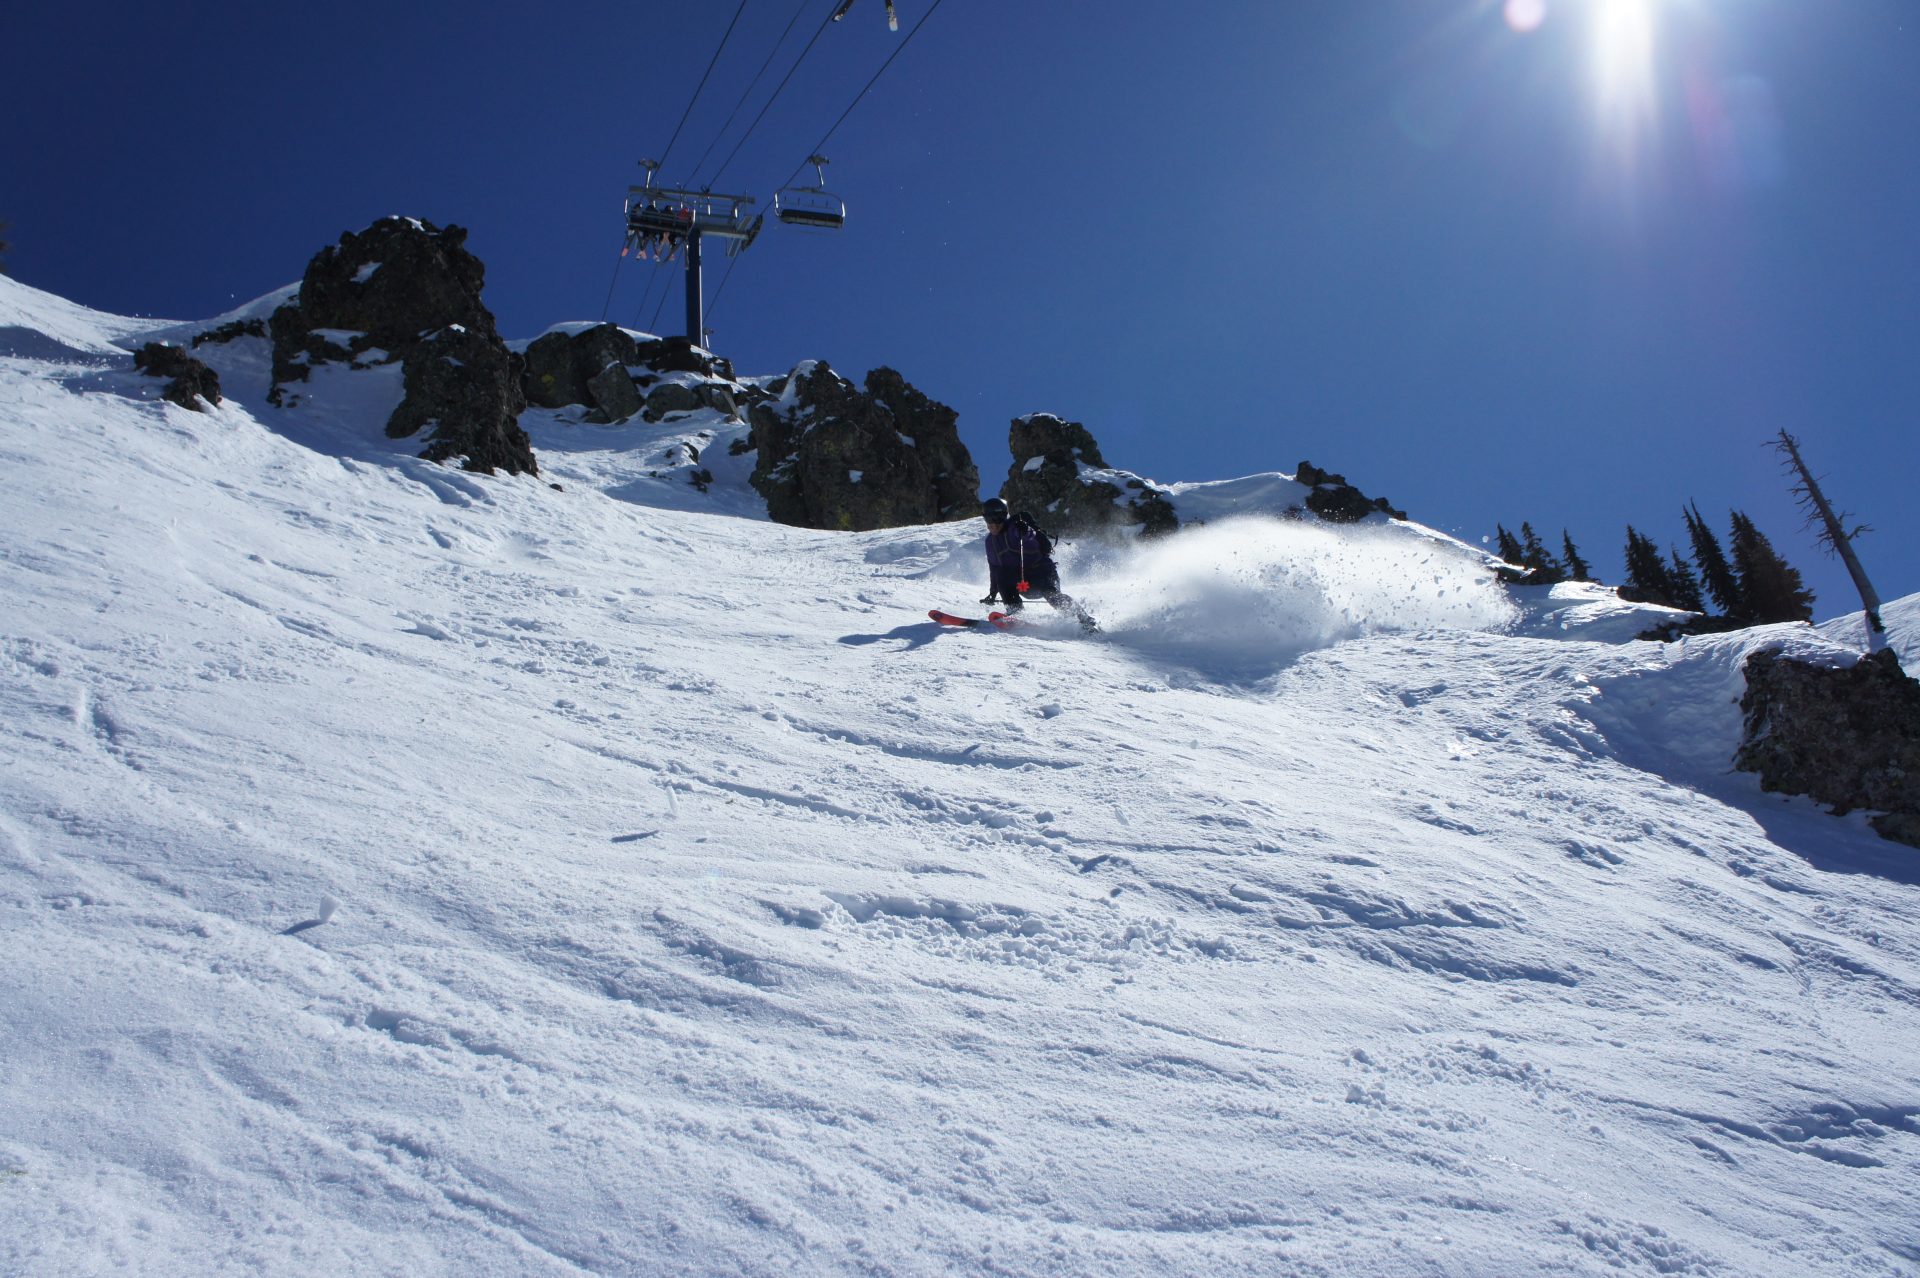 SnowBrains - Snow Ski & Ride News, Weather, Photo, and Video